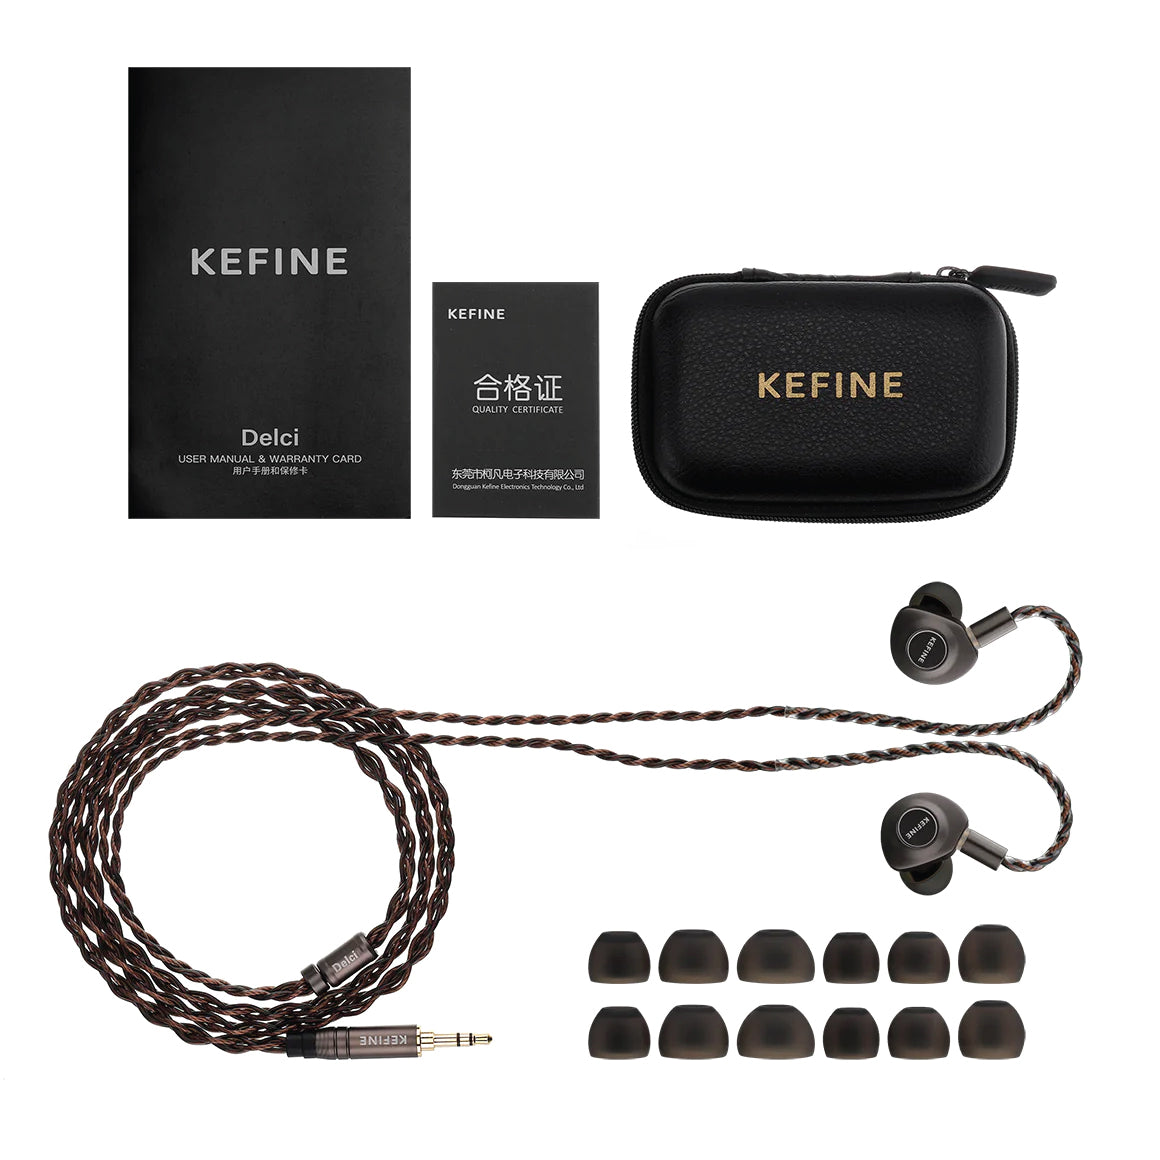 Headphone-zone-Kefine-Delci